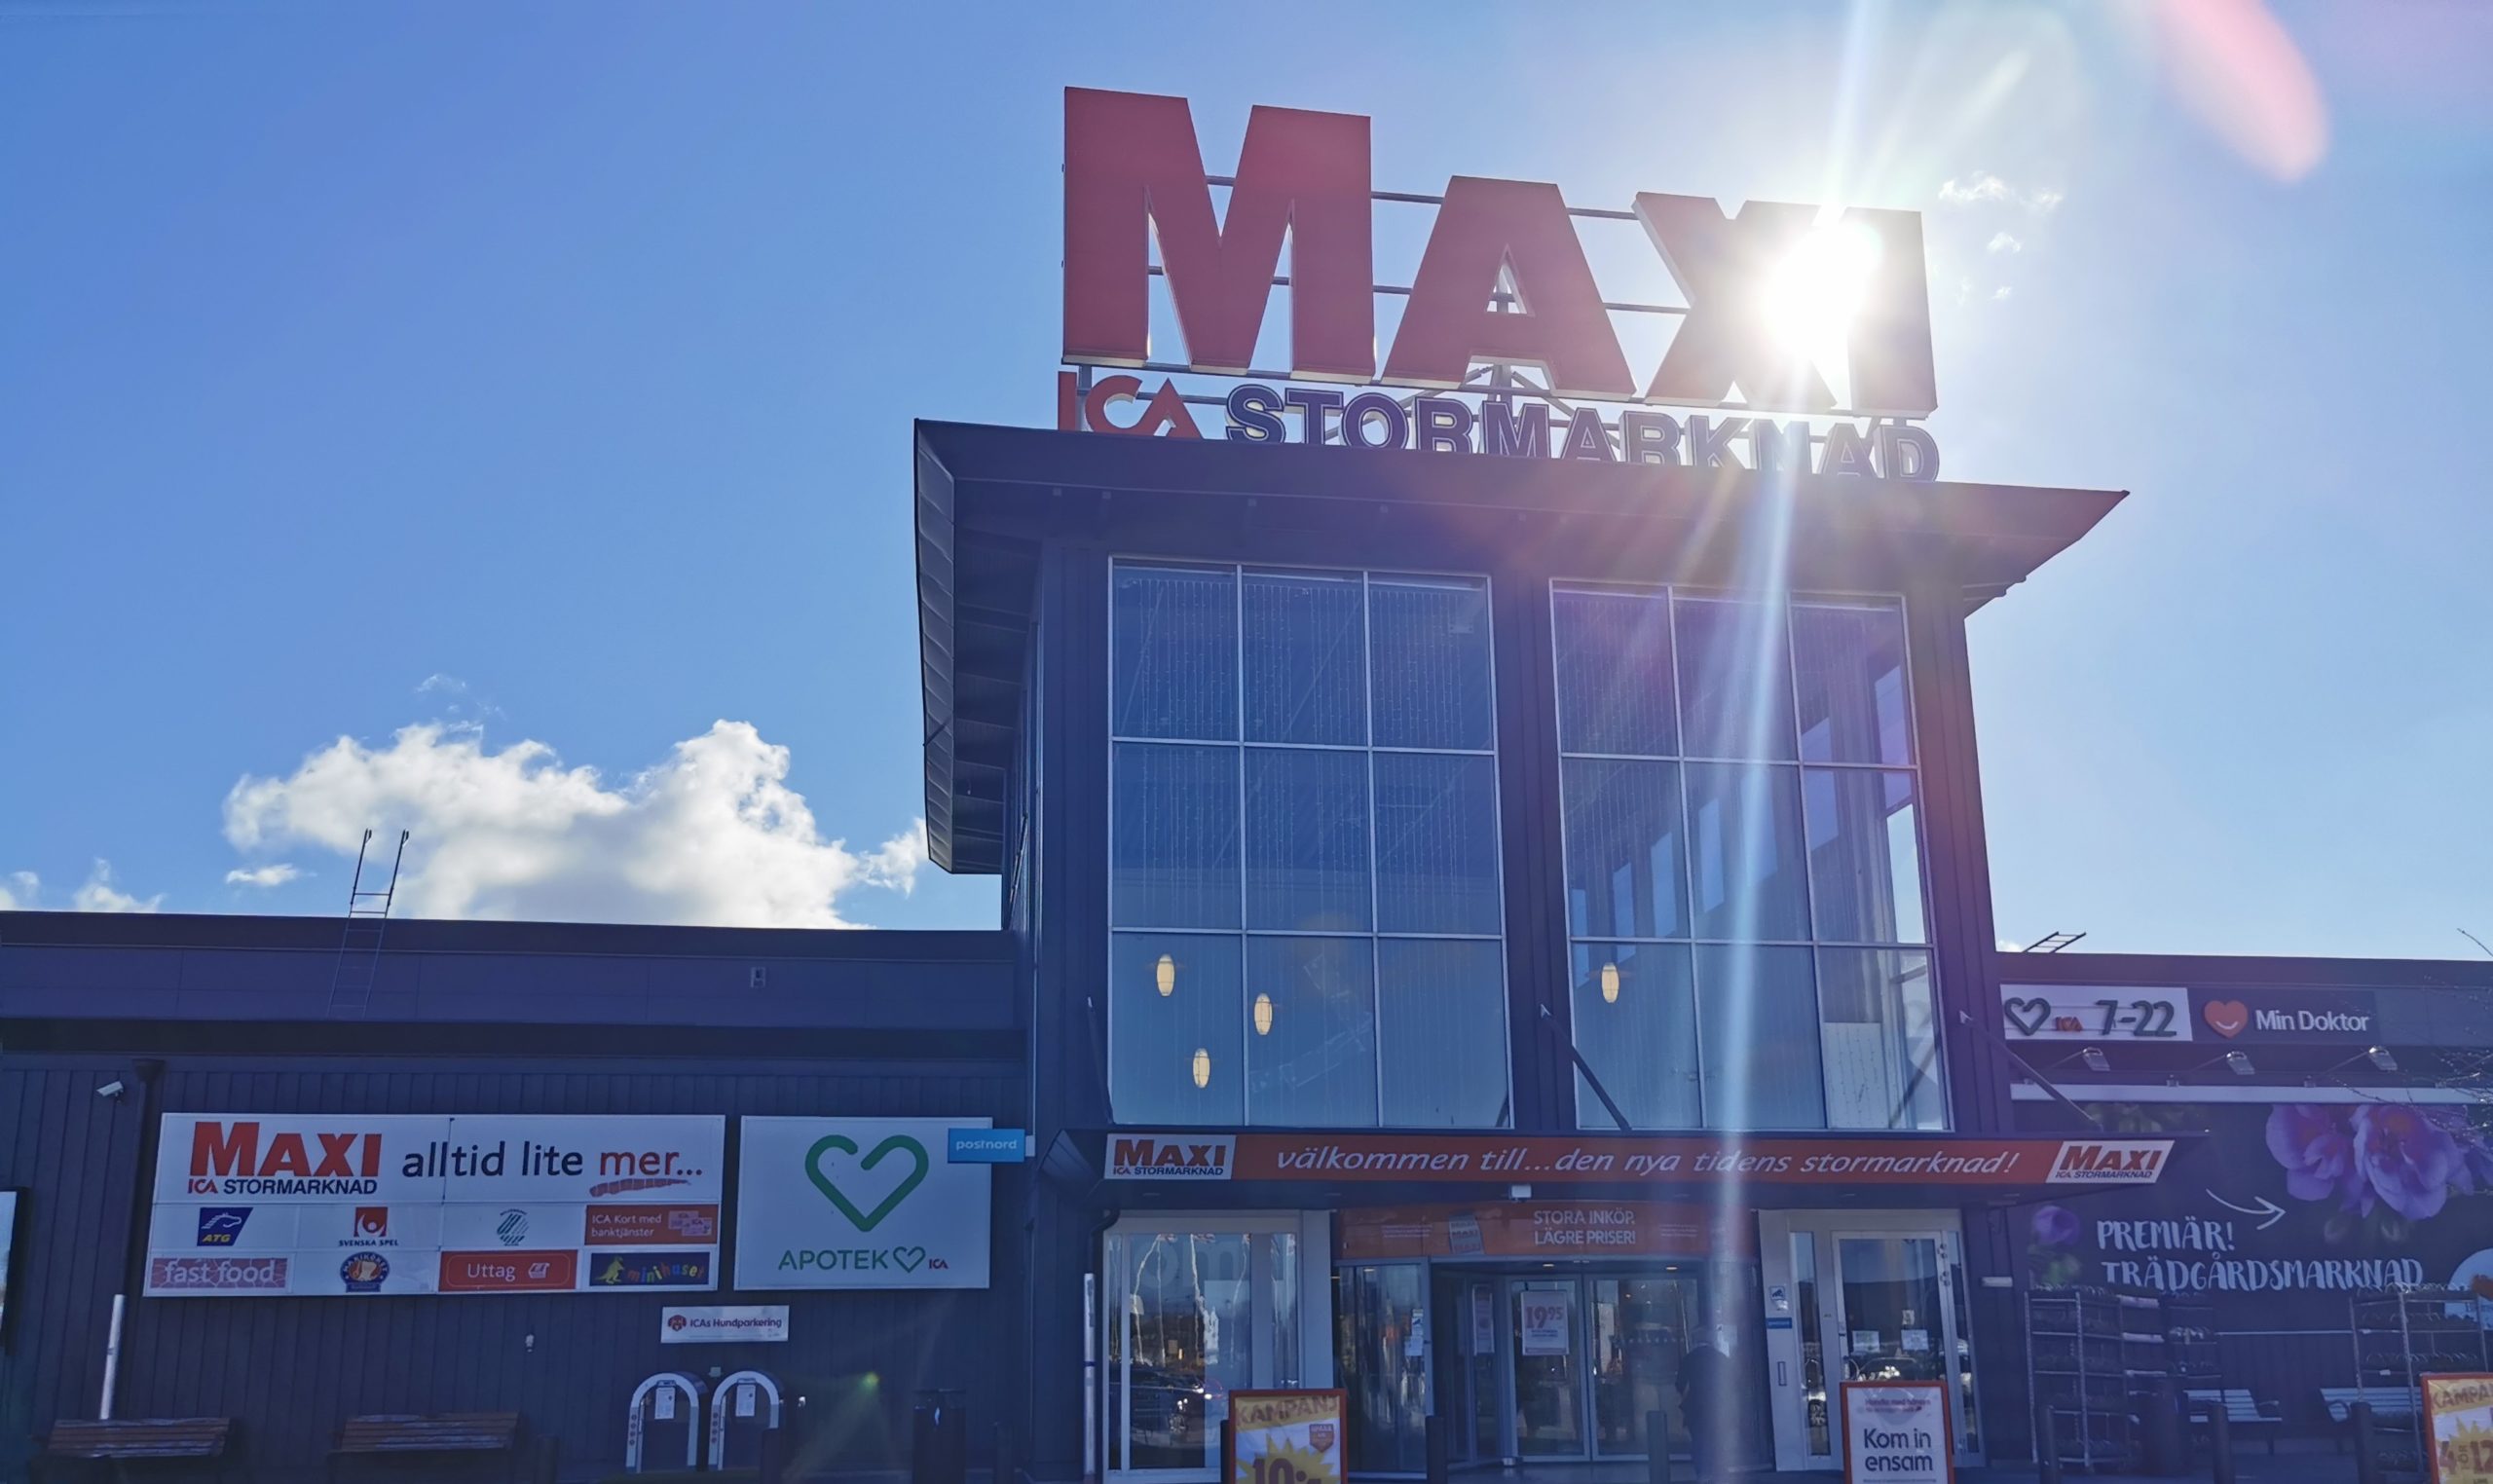 ICA Maxi Stormarknad Toftanäs